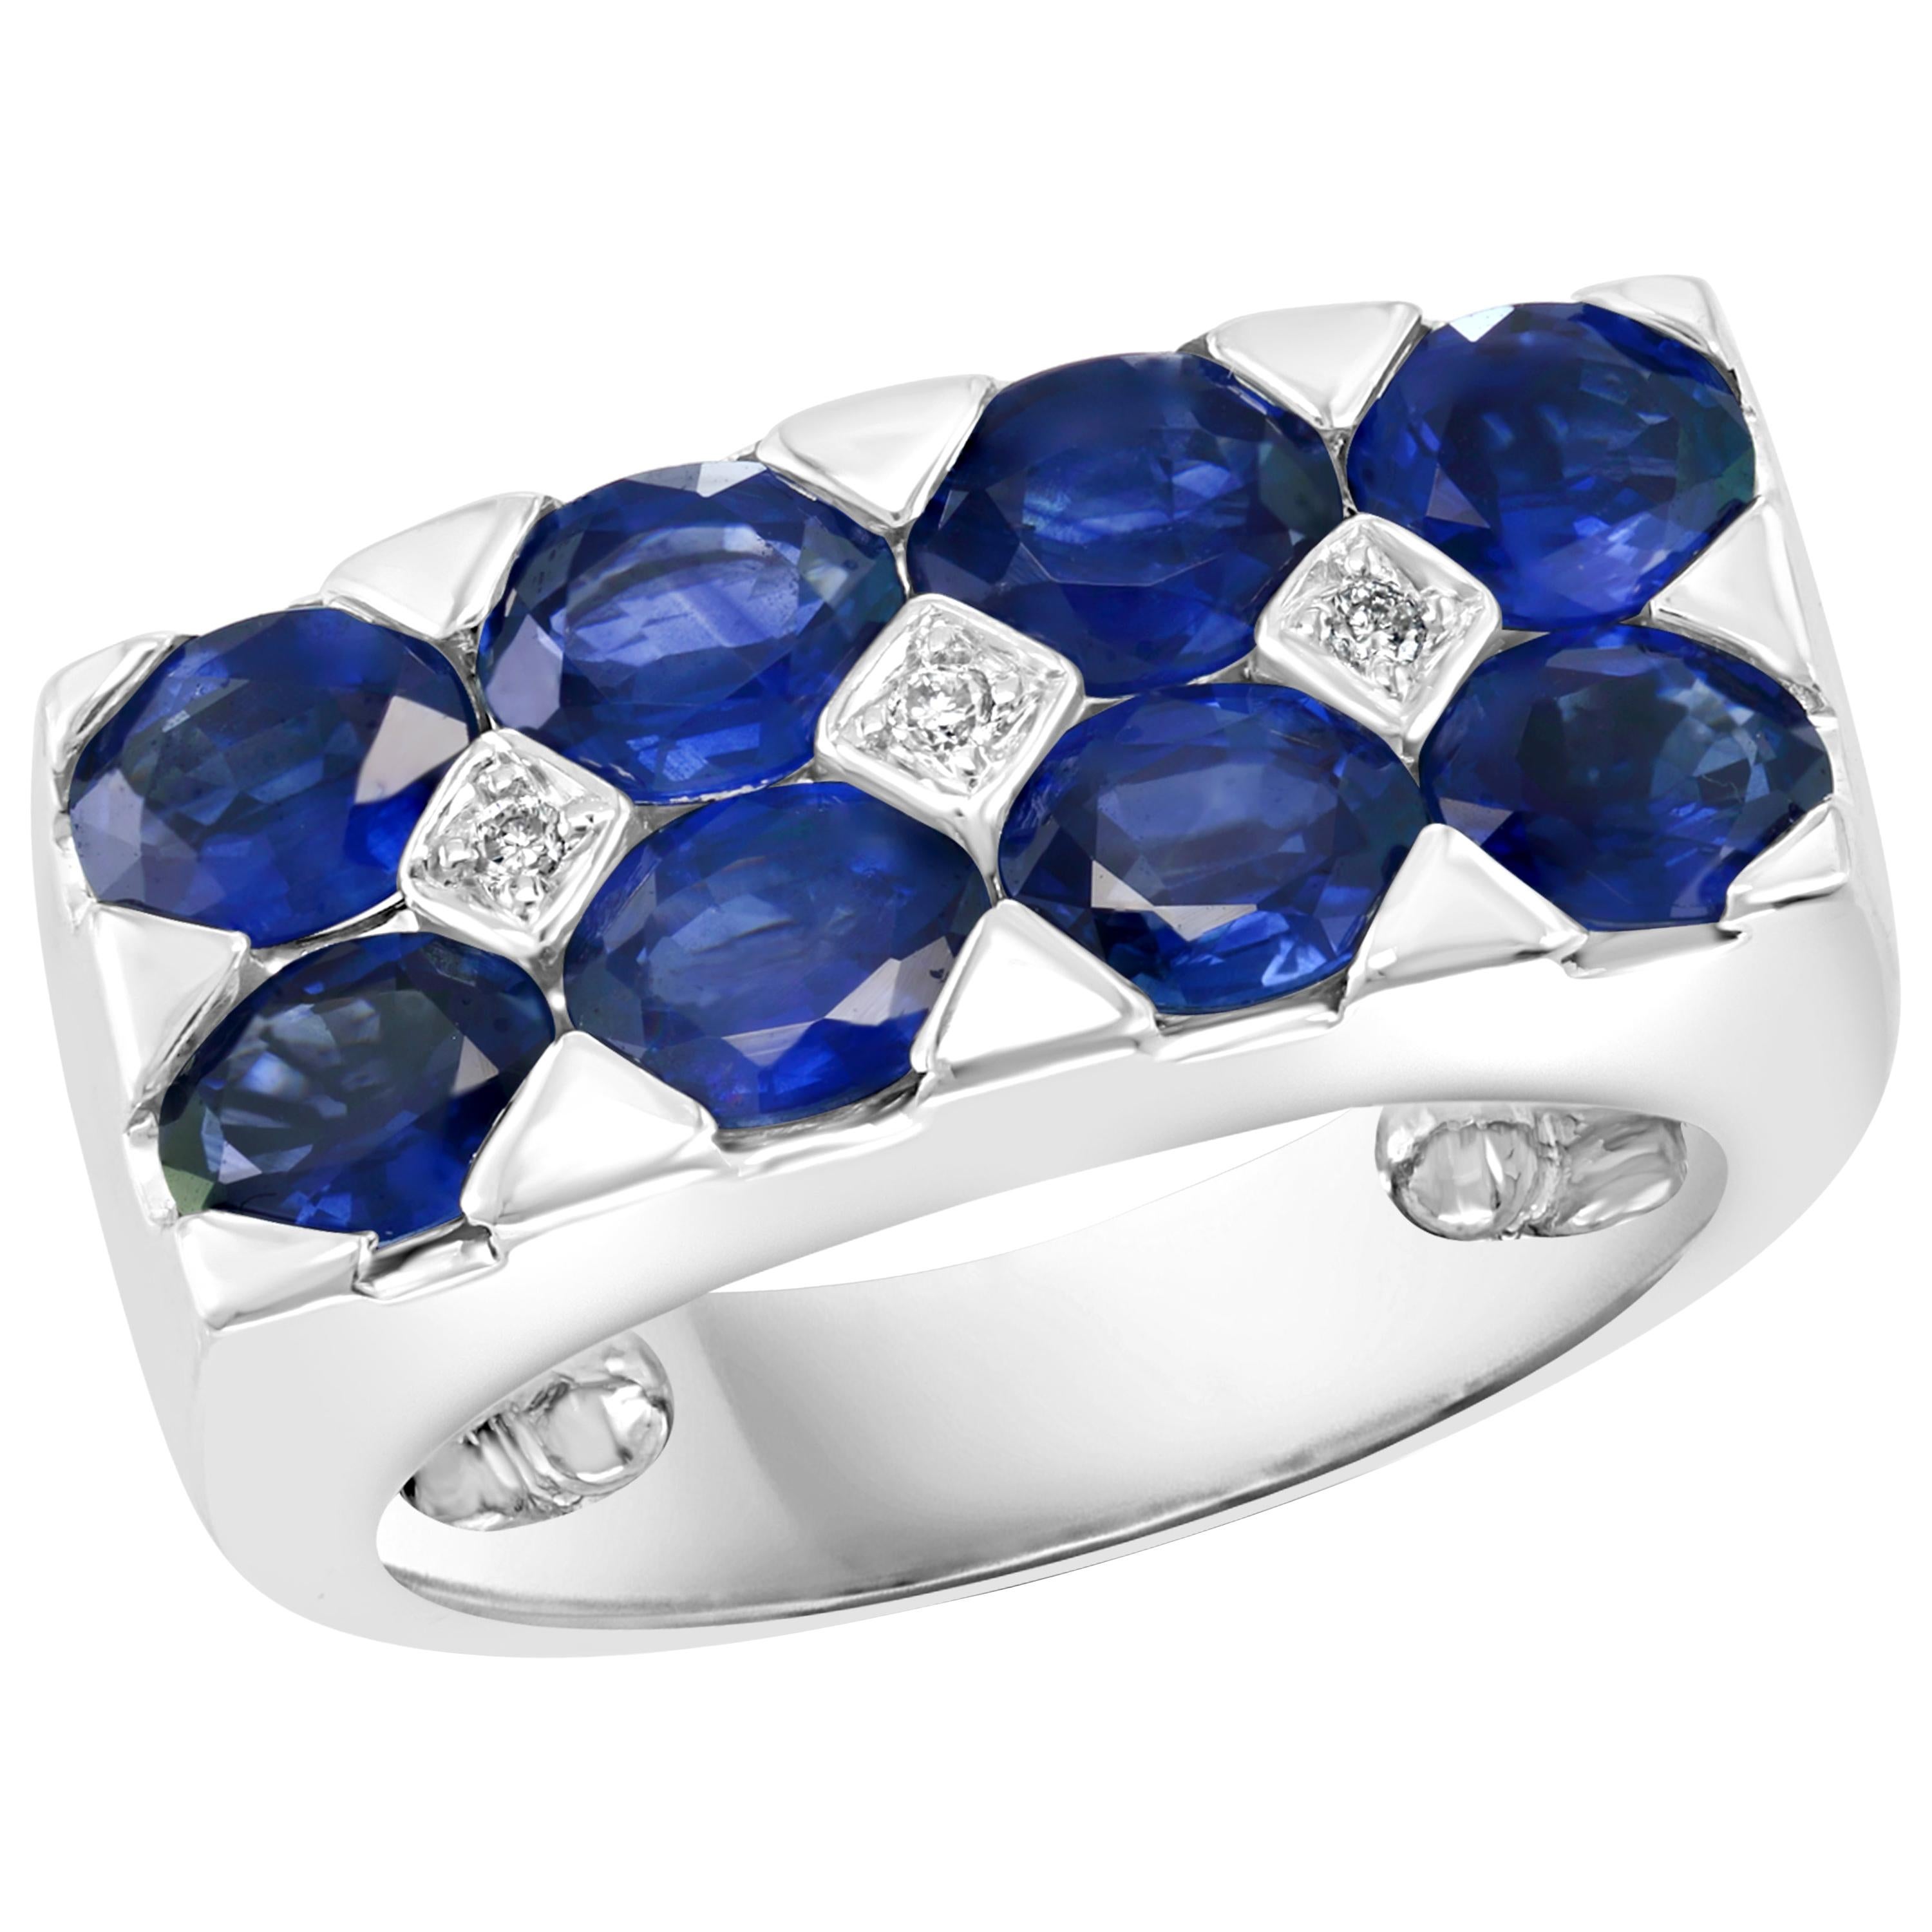 2.5 Carat Blue Sapphire and Diamond Cocktail Ring in 18 Karat White Gold Estate